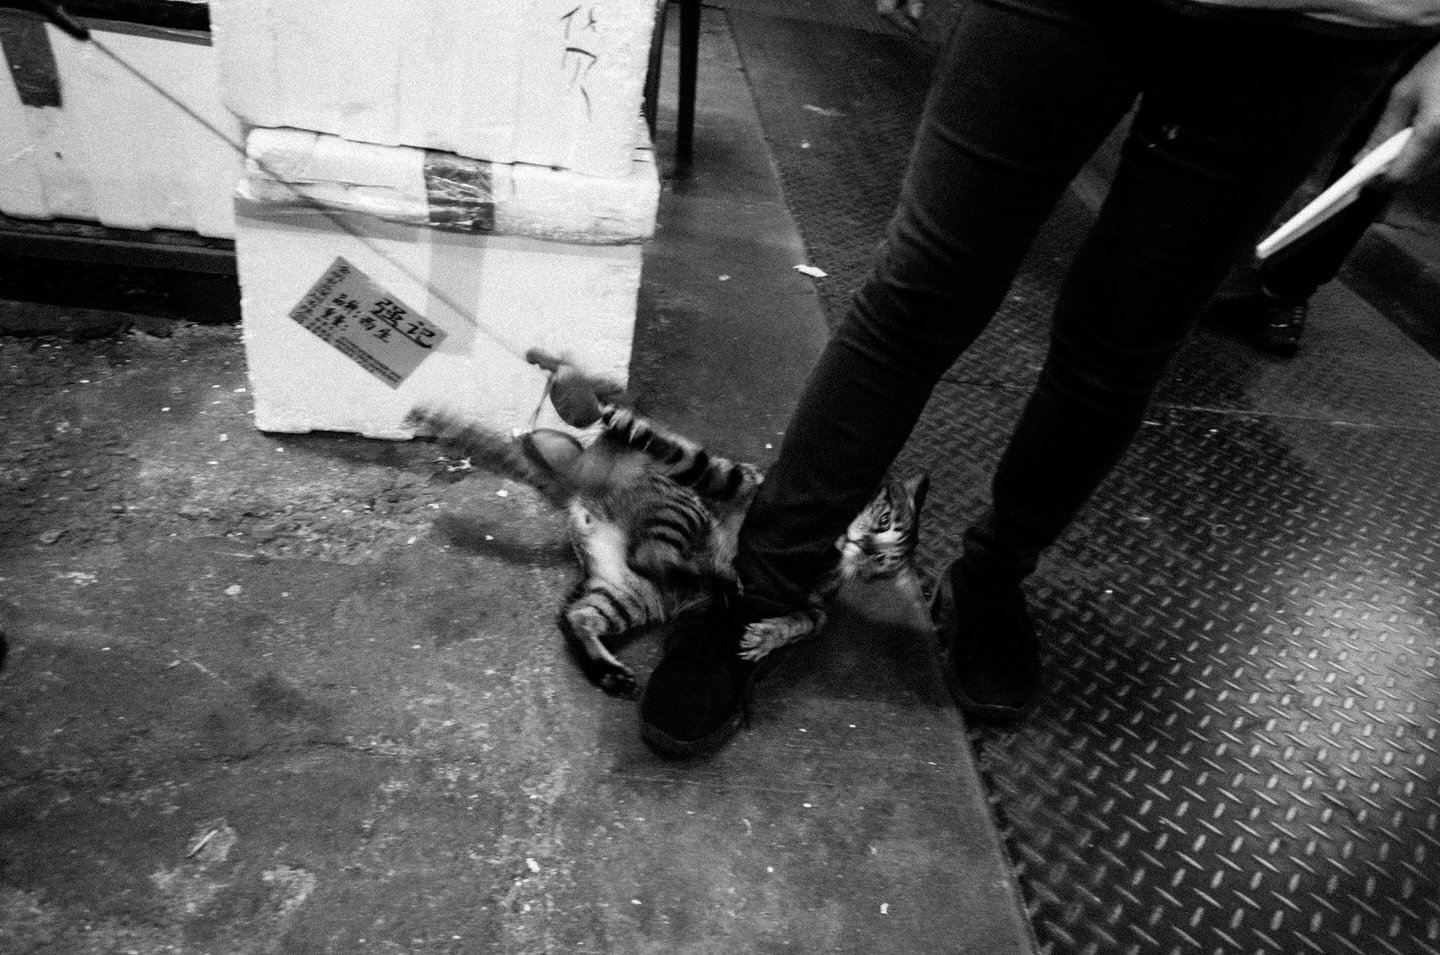 February 2024
.
.
.
.
.
. 
#streetphotography #streetsnap #filmpgotography #myfeatureshoot #everybodystreet #spicollective #worldstreetfeature  #voidtokyo #bnw #blackandwhite #myspc #bnw_captures #写真好きな人と繋がりたい #写真 #bnw_greatshots #london #ricohgr2 #